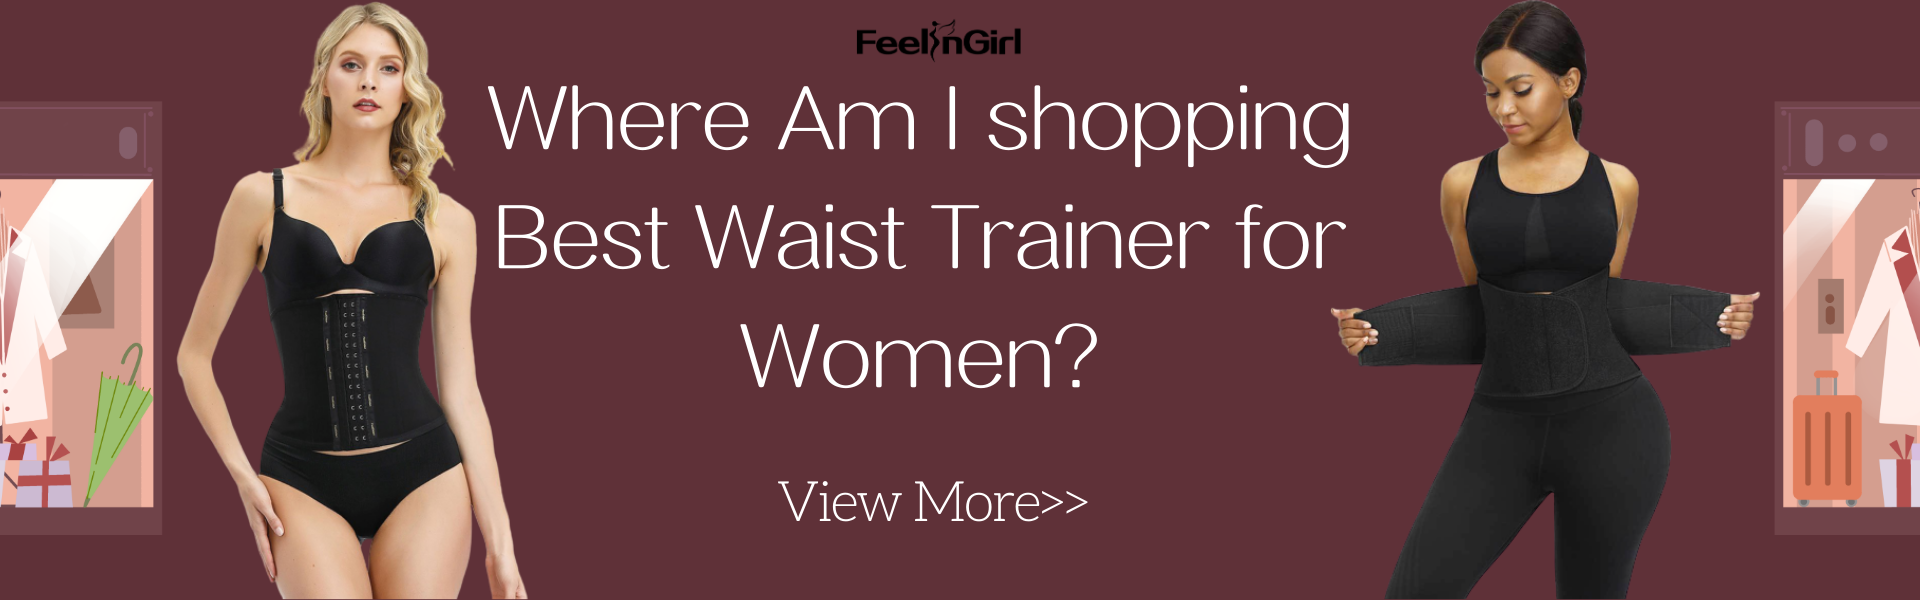 Where Am I shopping Best Waist Trainer for Women?